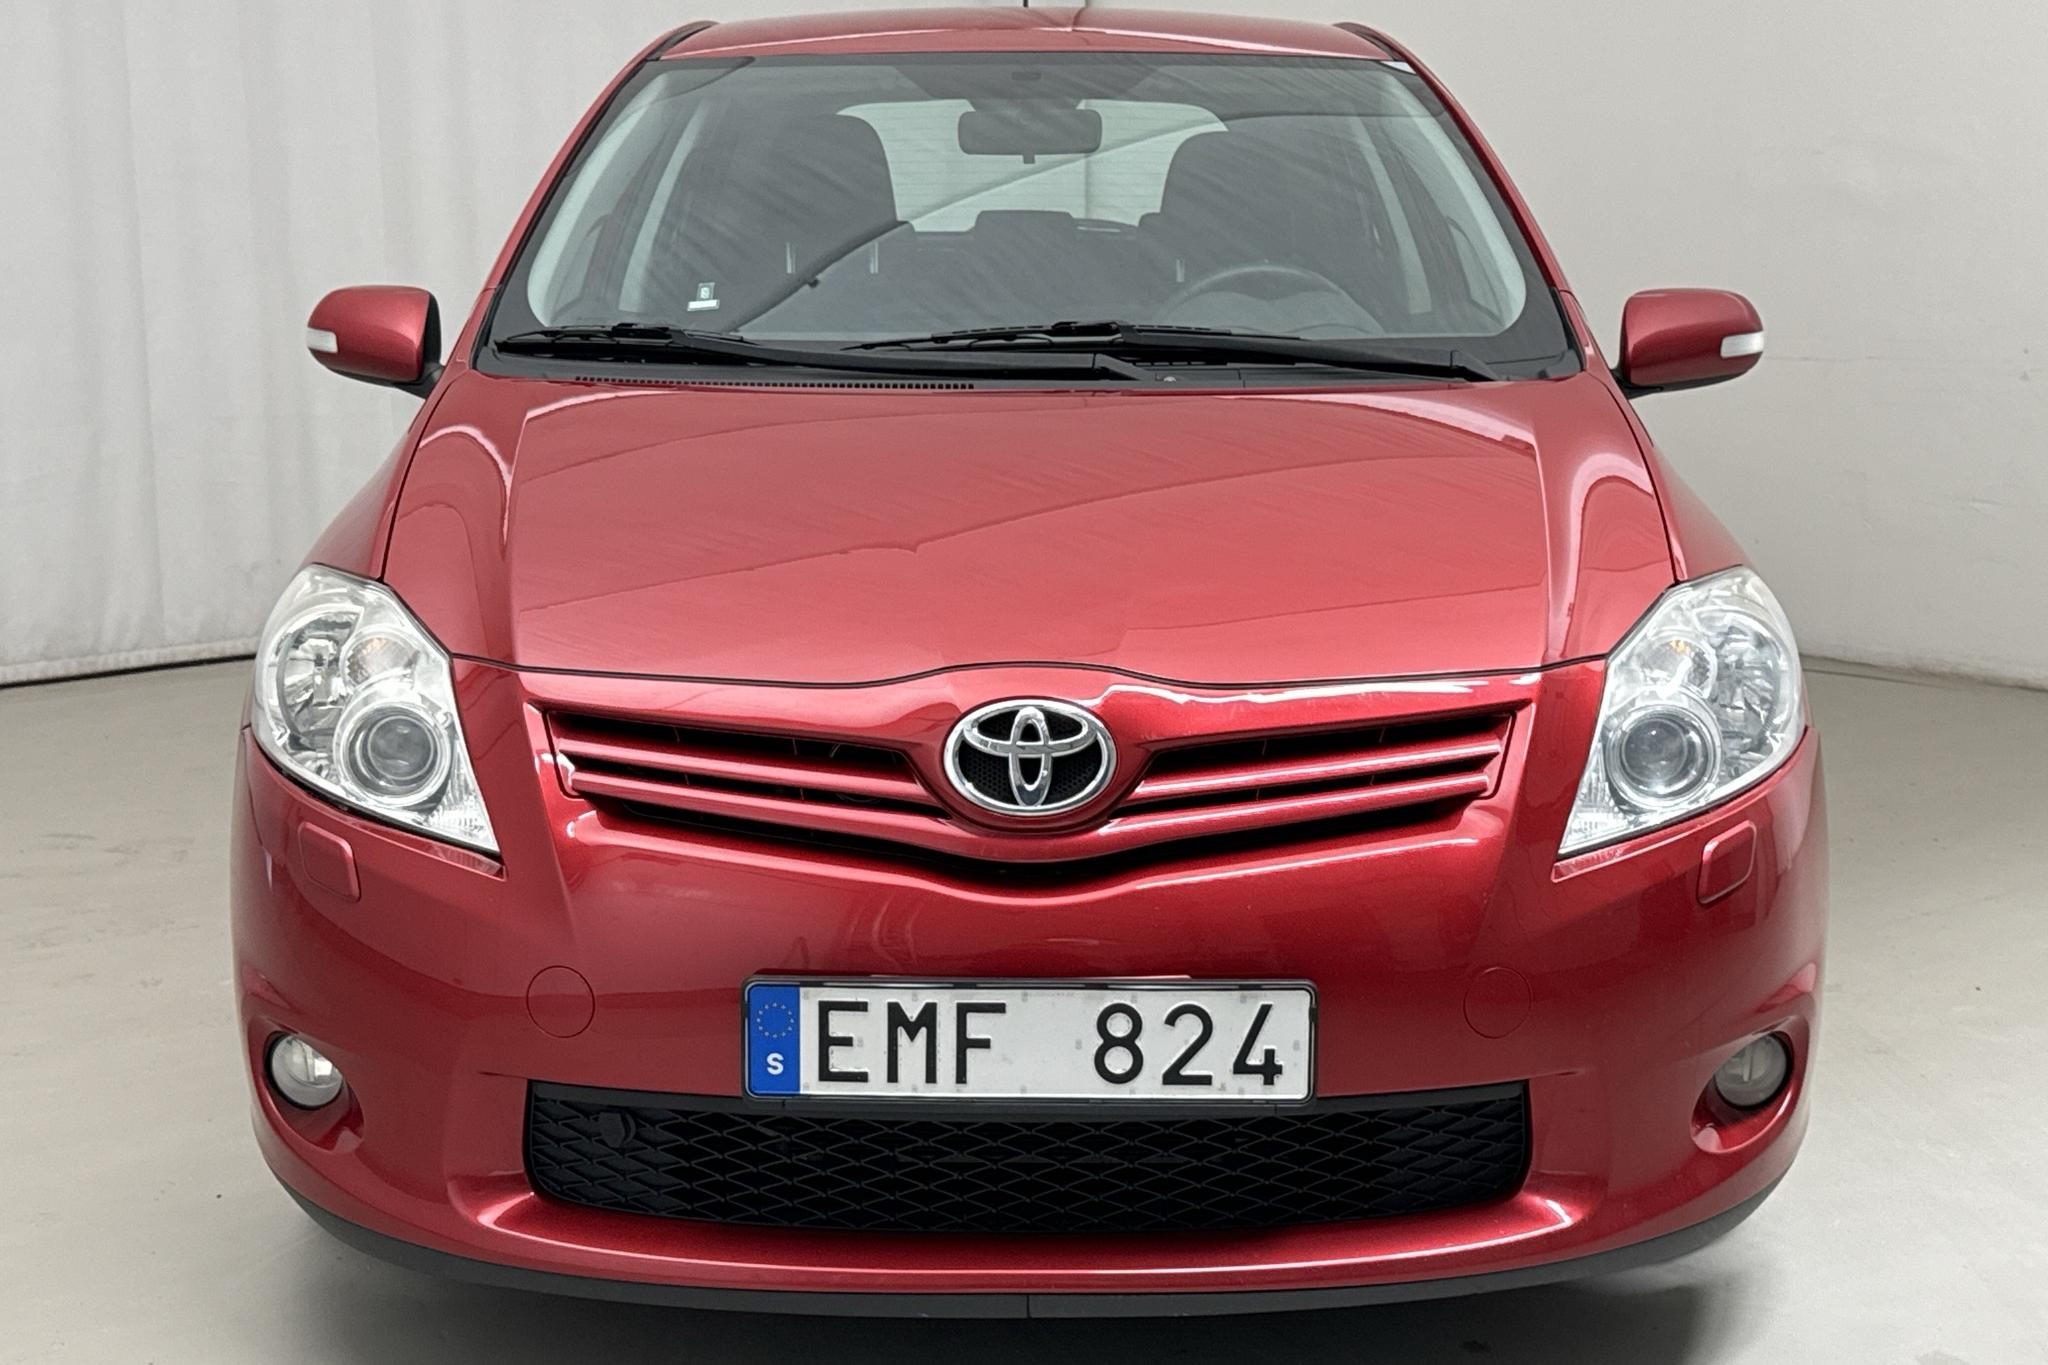 Toyota Auris 1.4 D-4D 5dr (90hk) - 17 697 mil - Manuell - Dark Red - 2012